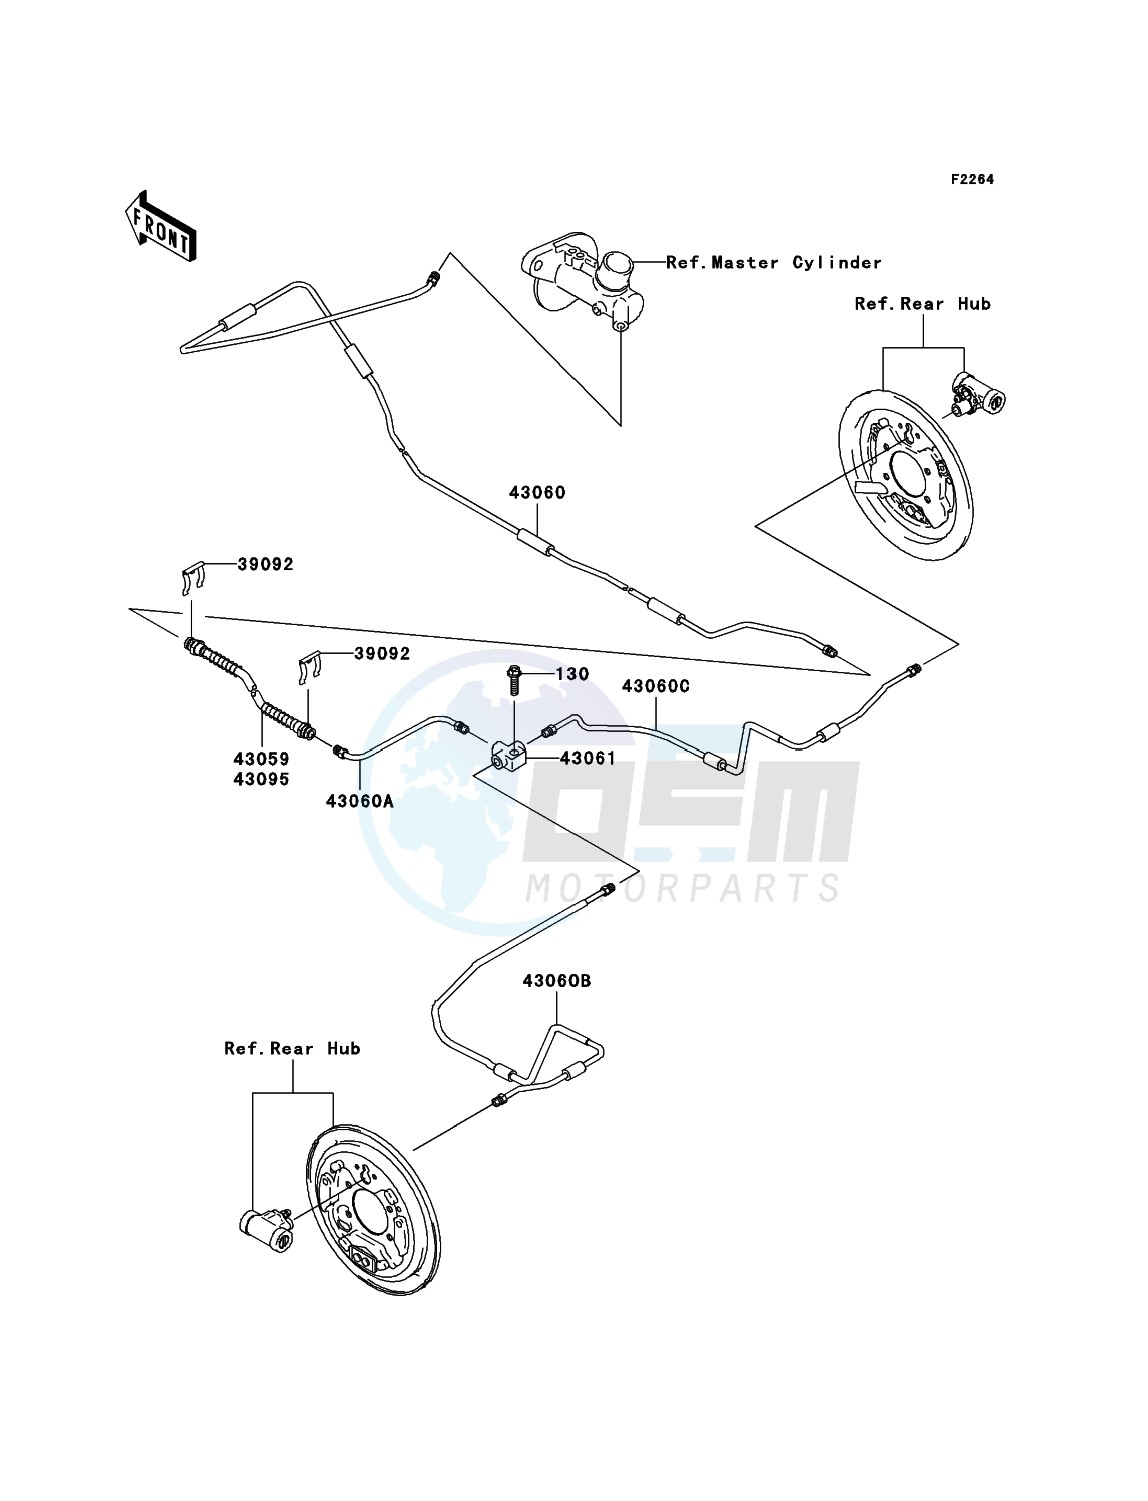 Rear Brake Piping blueprint